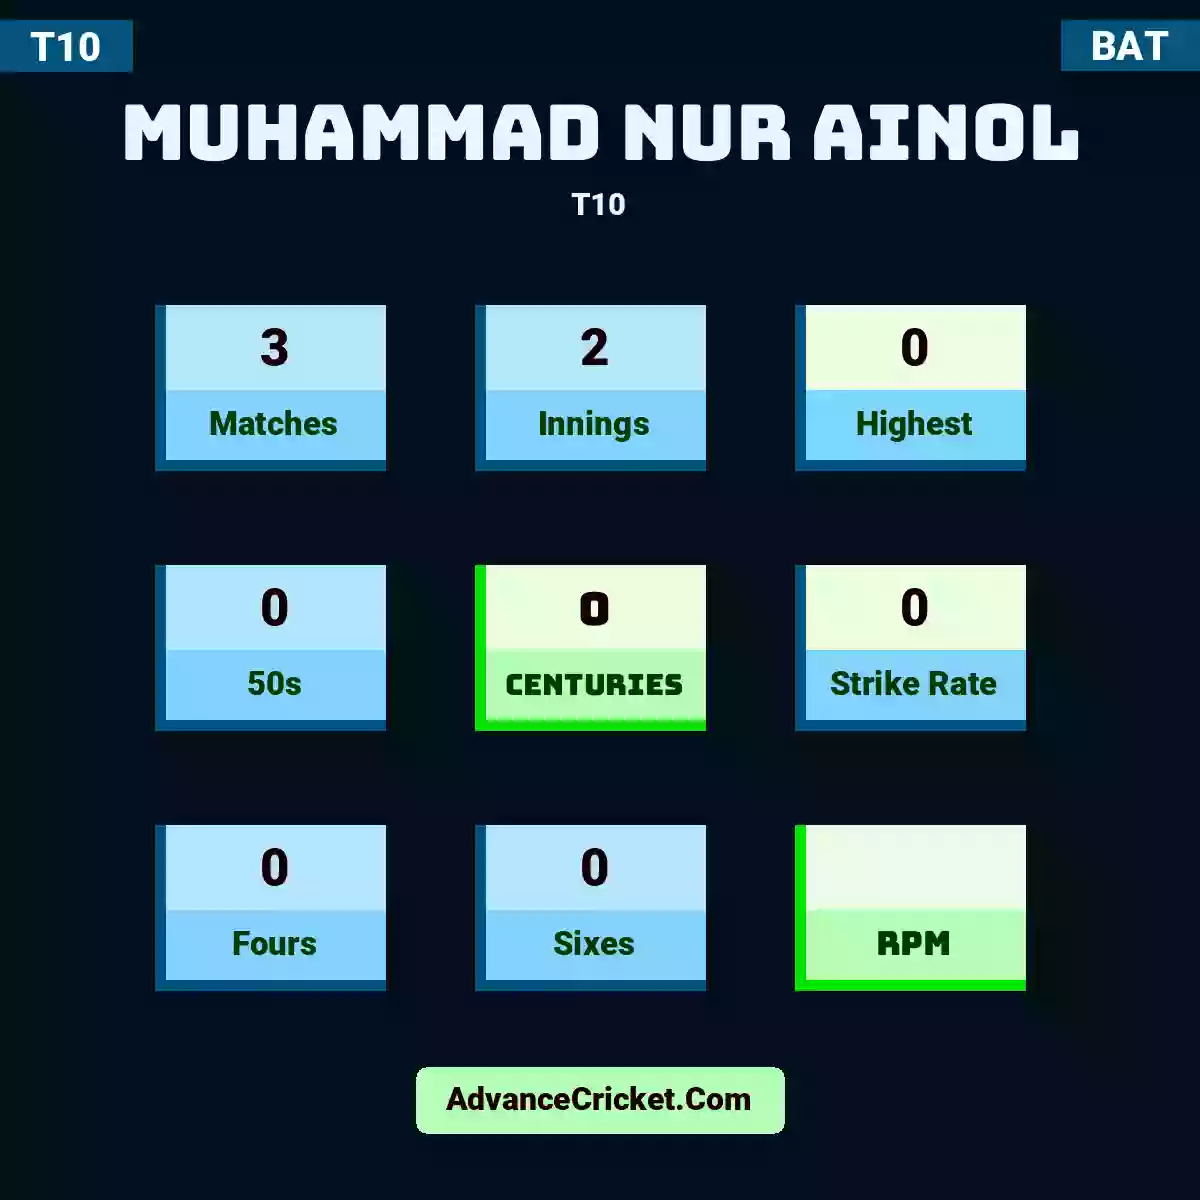 Muhammad Nur Ainol T10 , Muhammad Nur Ainol played 3 matches, scored 0 runs as highest, 0 half-centuries, and 0 centuries, with a strike rate of 0. M.Ainol hit 0 fours and 0 sixes.